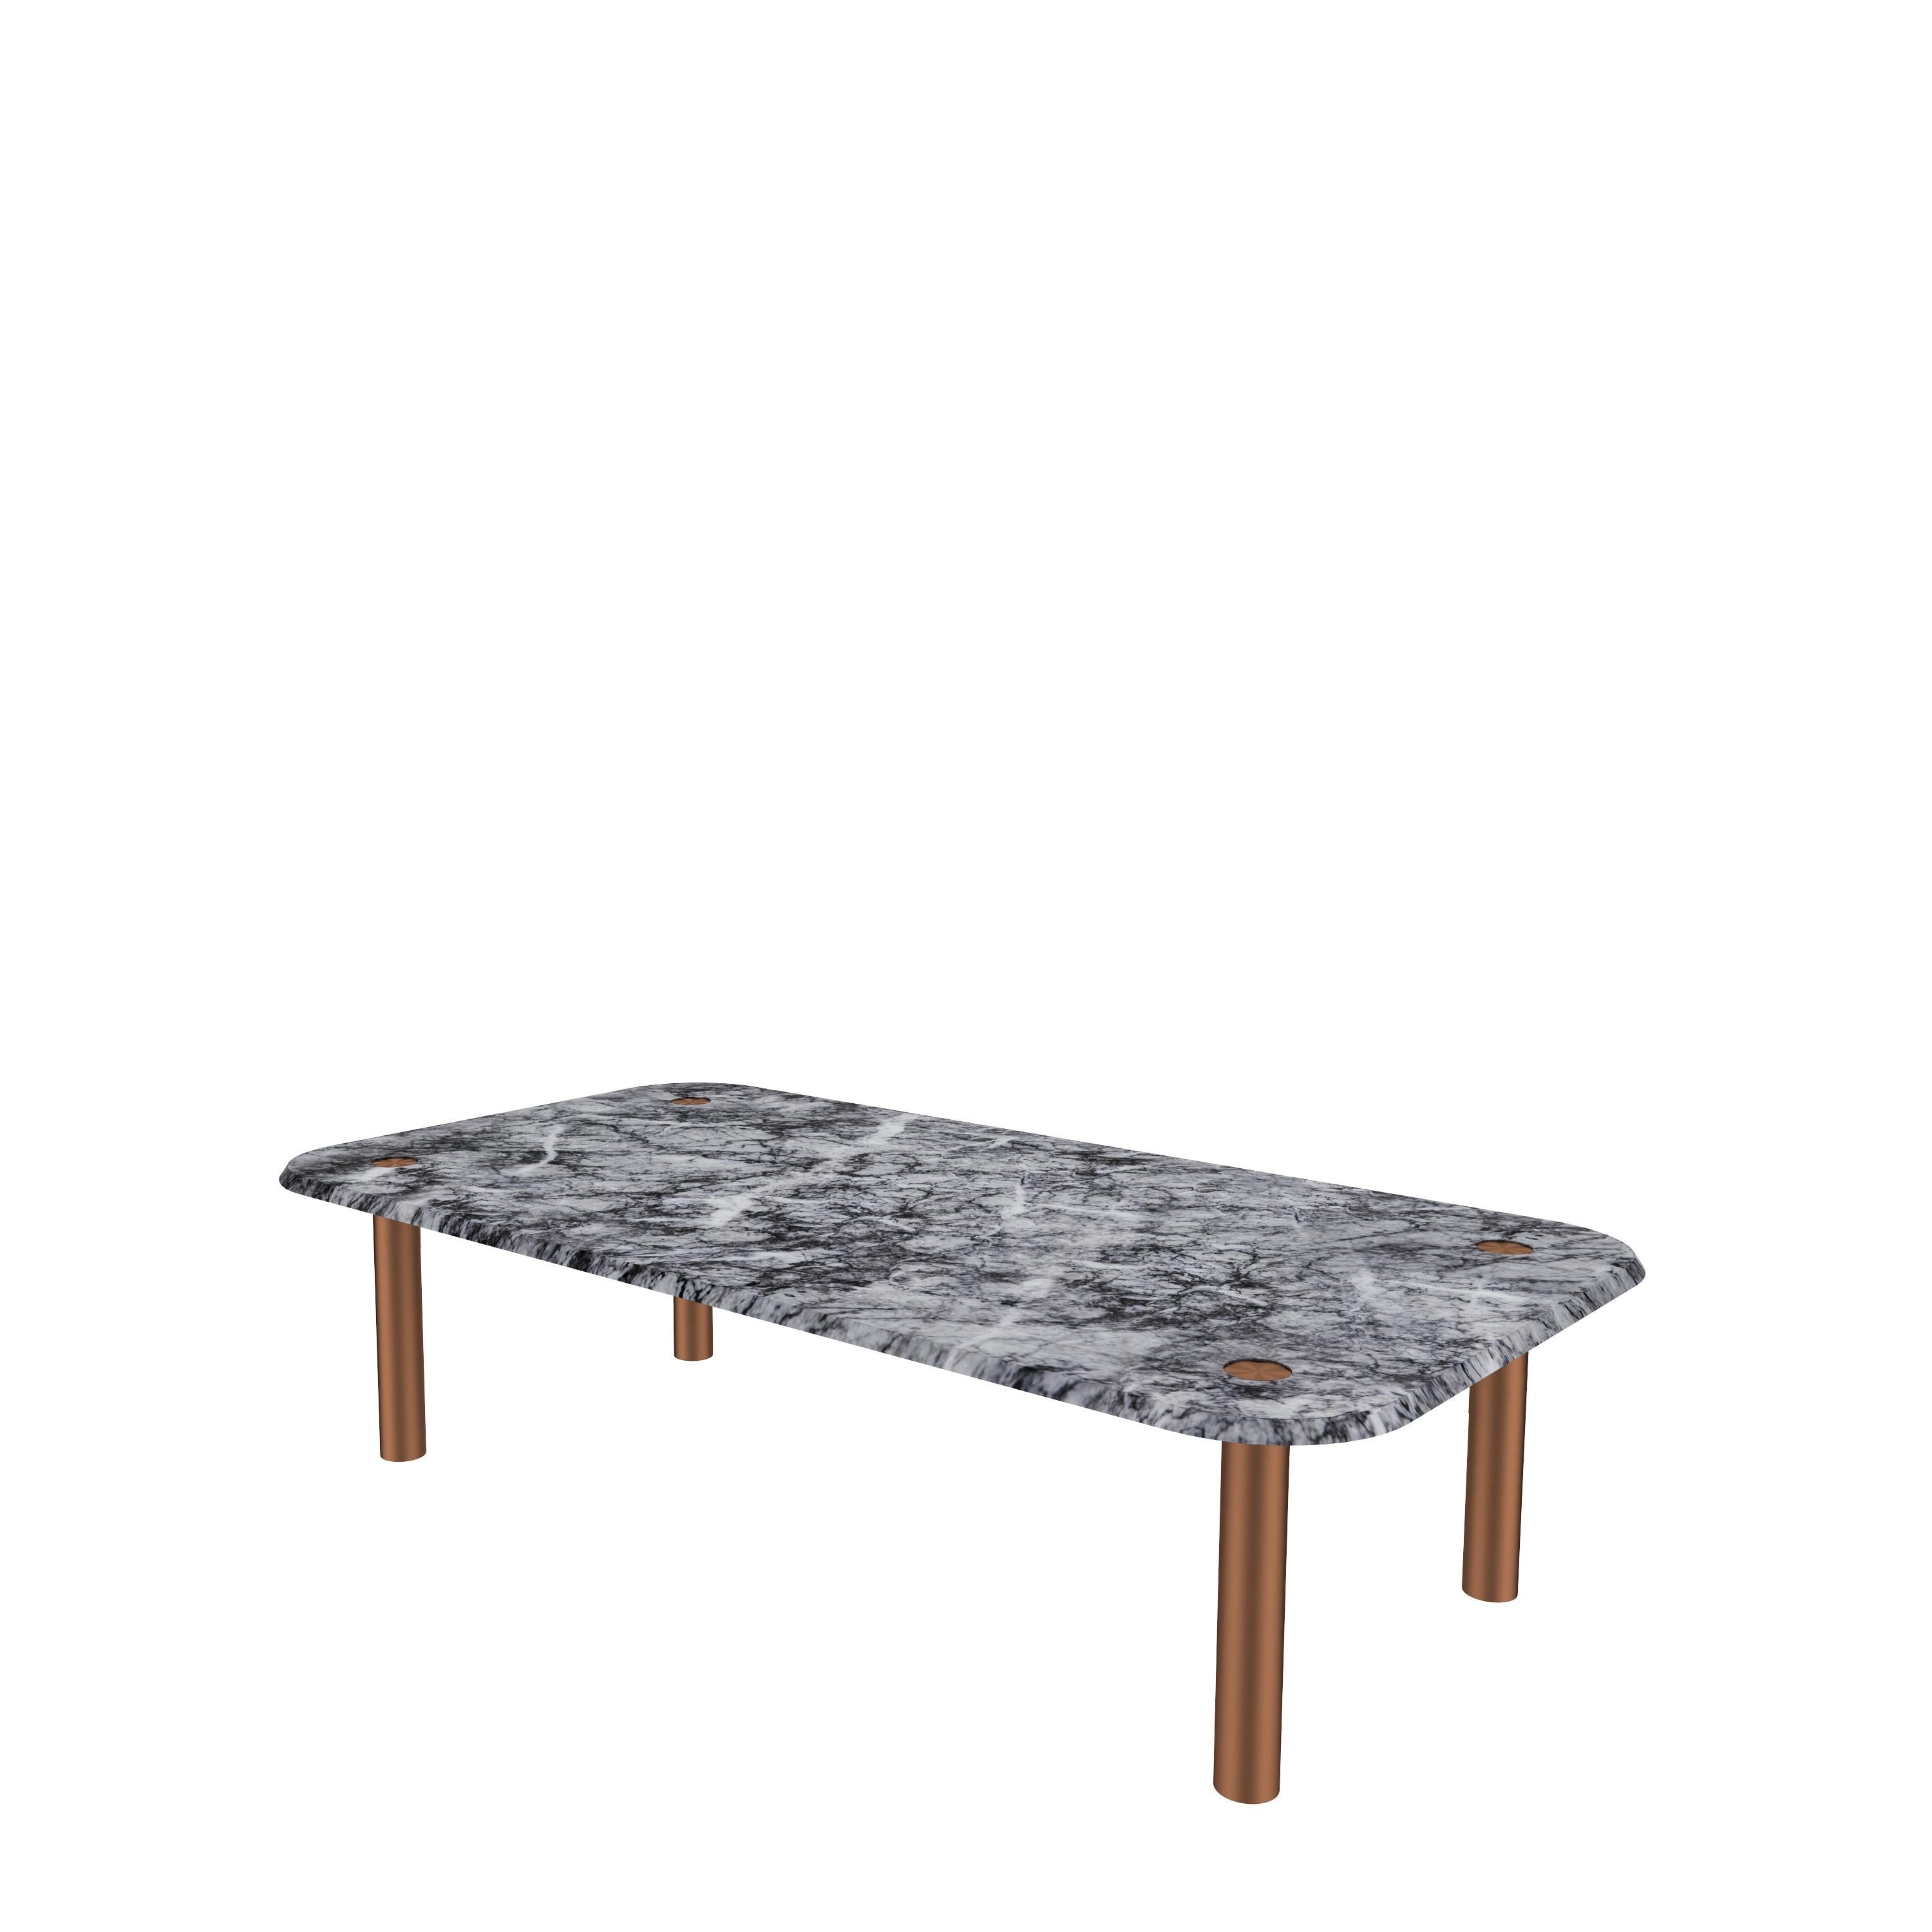 Scandinavian Modern NORDST SEM Coffee Table, Italian Black Eagle Marble, Danish Modern Design, New For Sale